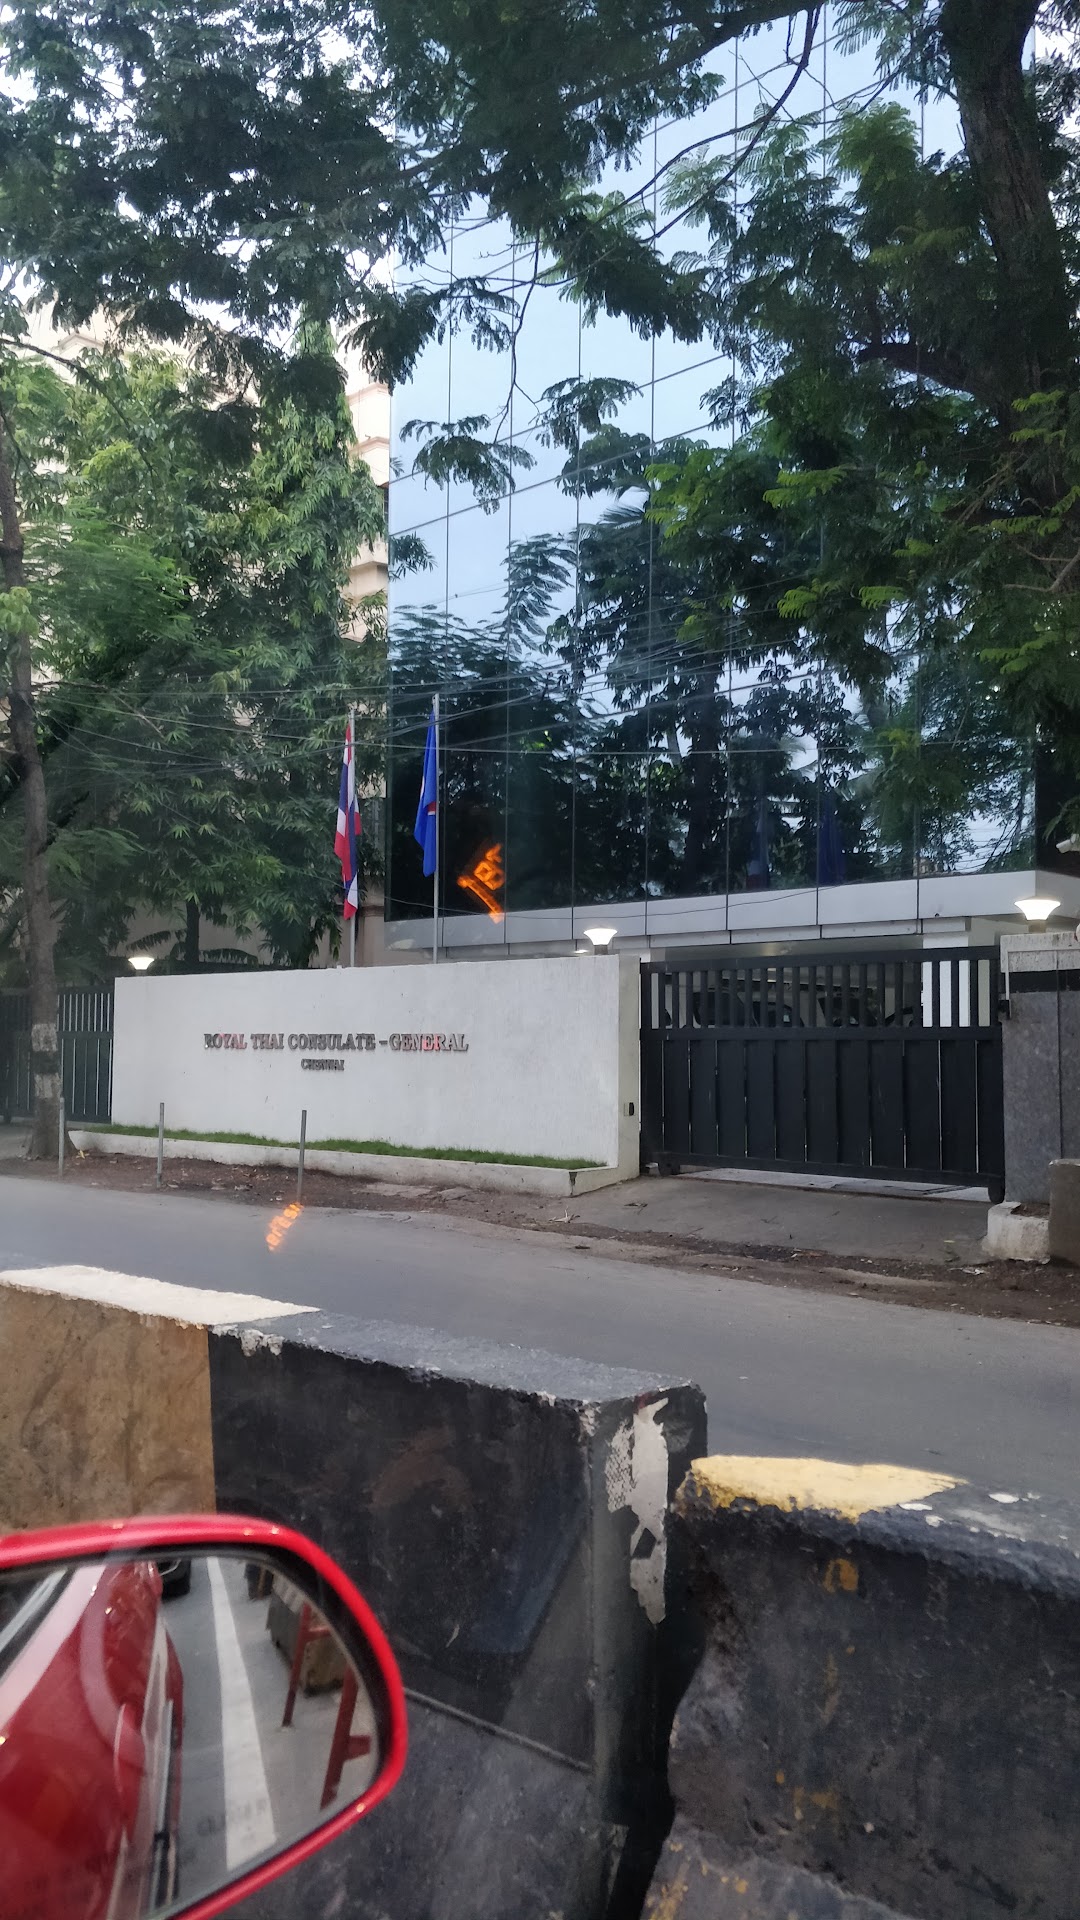 Royal Thai Consulate - General